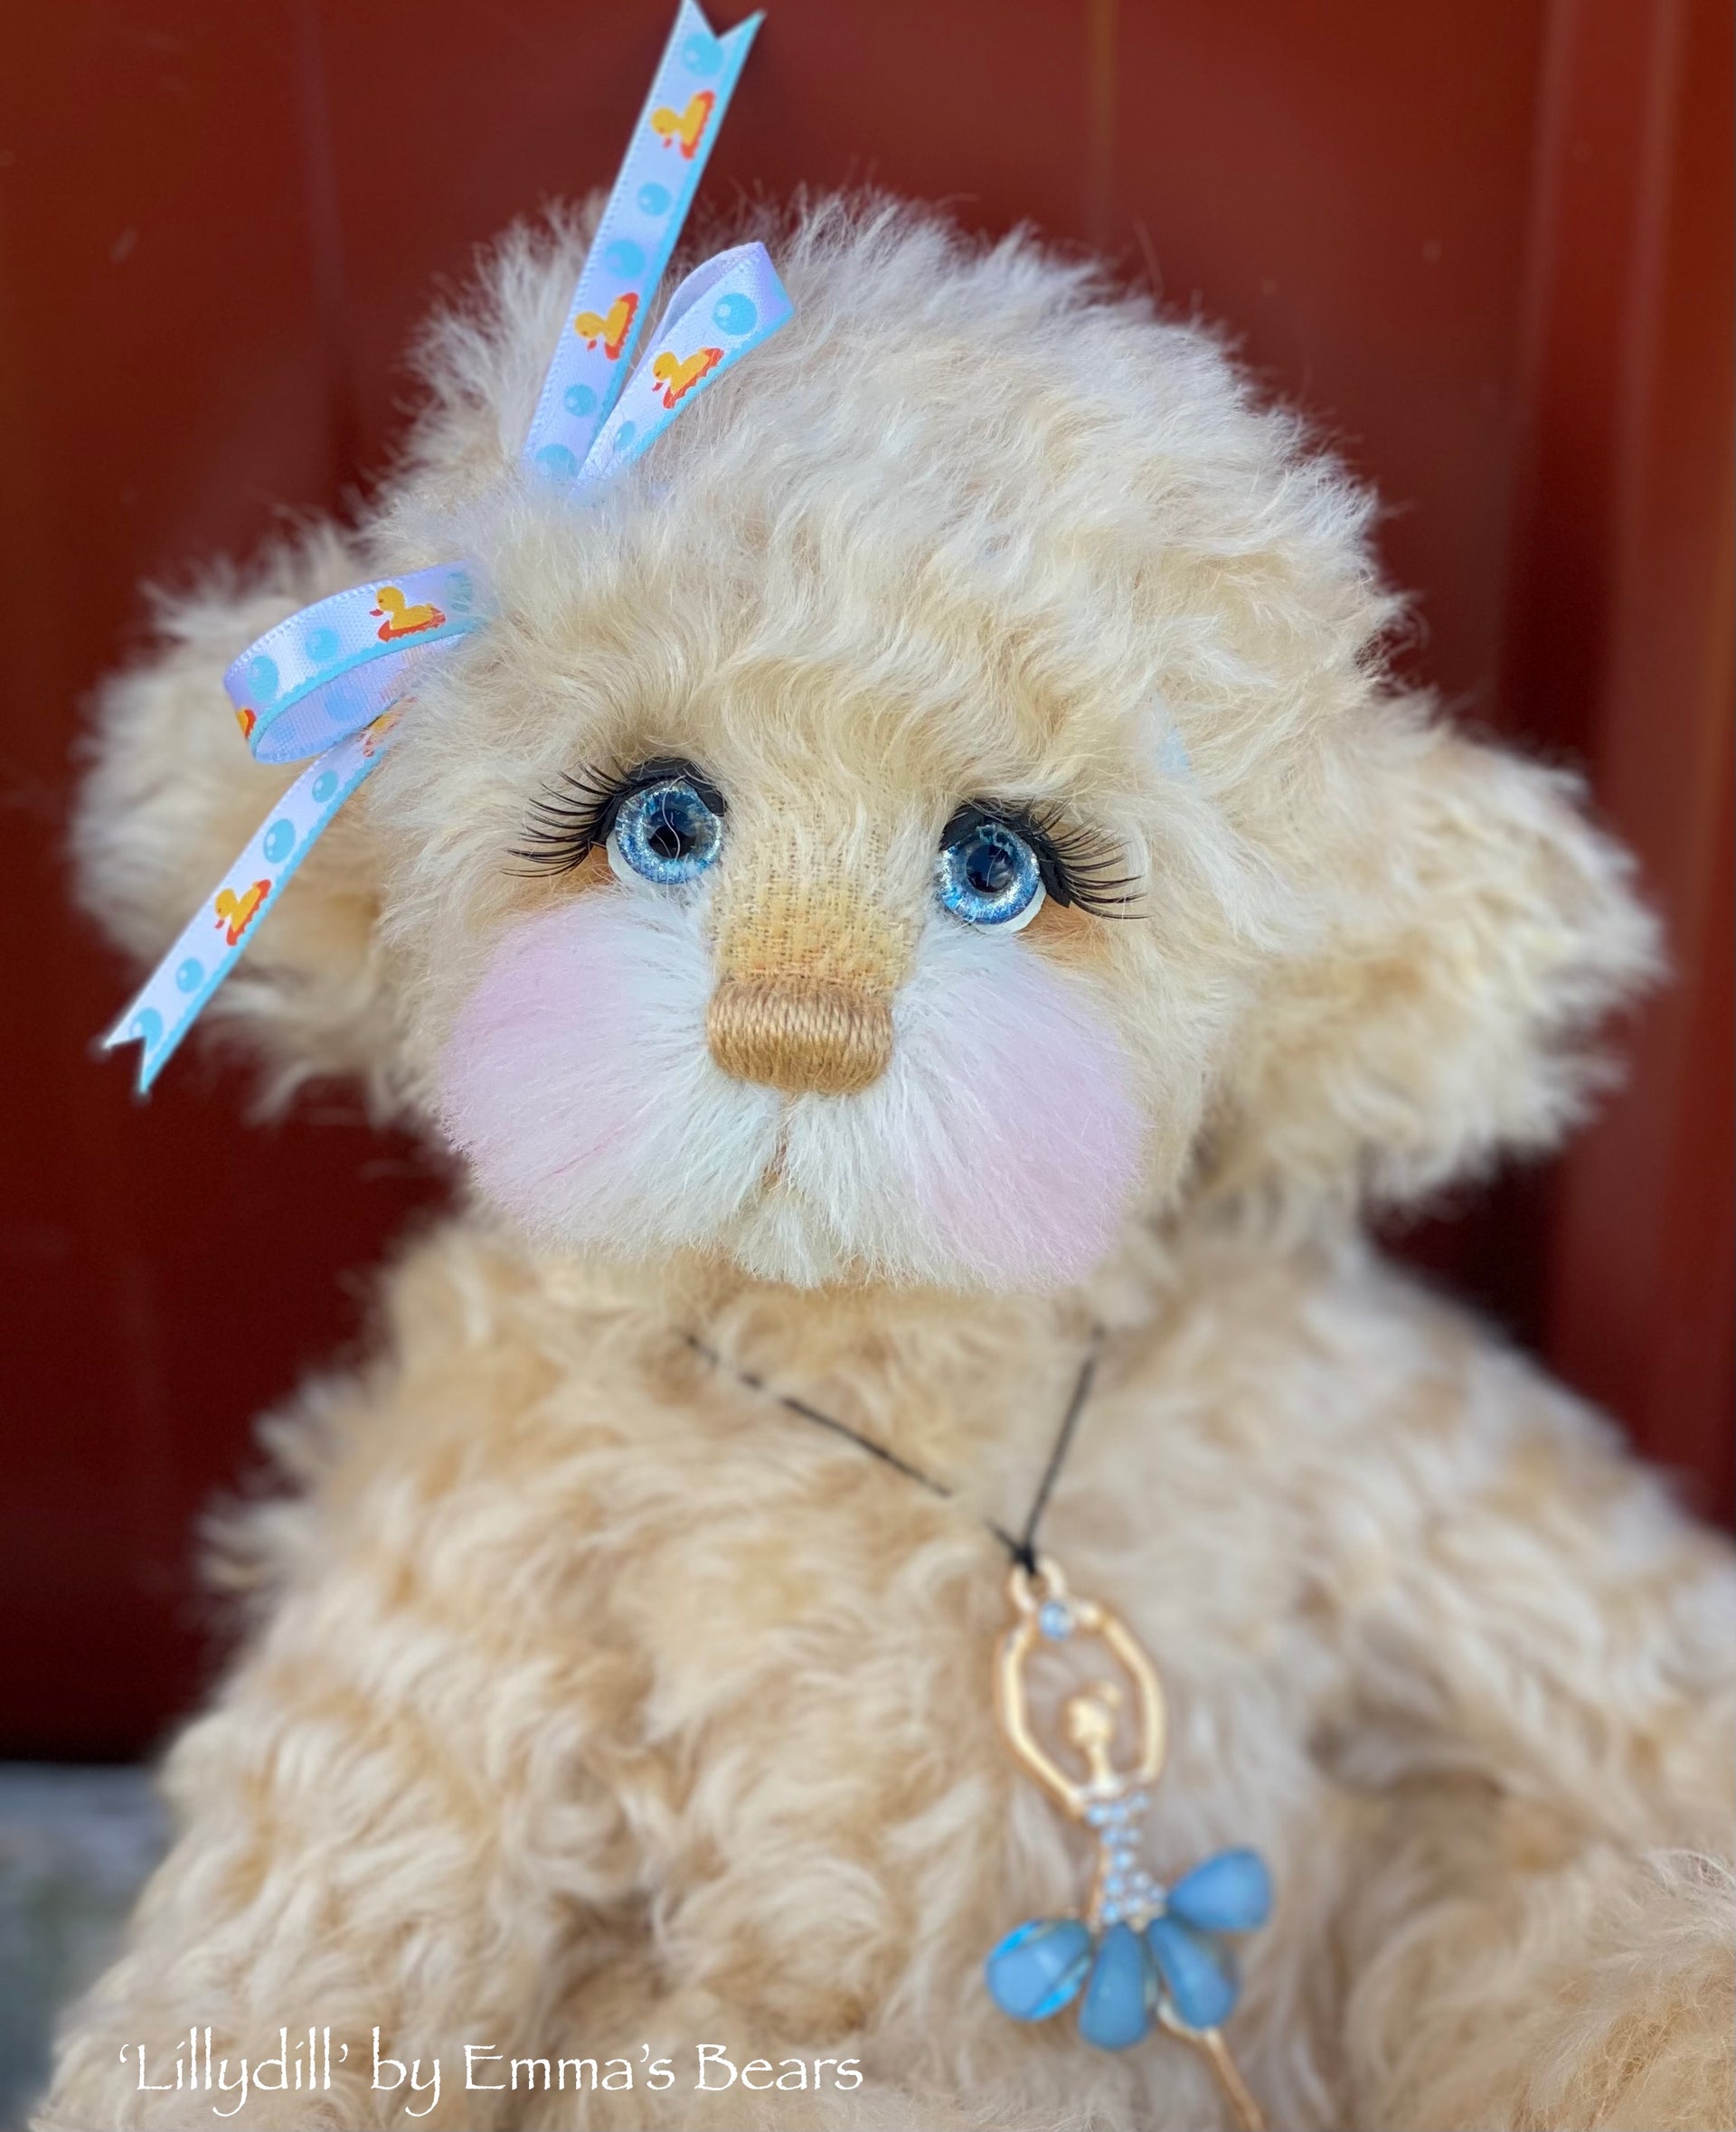 Lillydill - 12" Curly Kid Mohair and Alpaca artist bear by Emma's Bears - OOAK